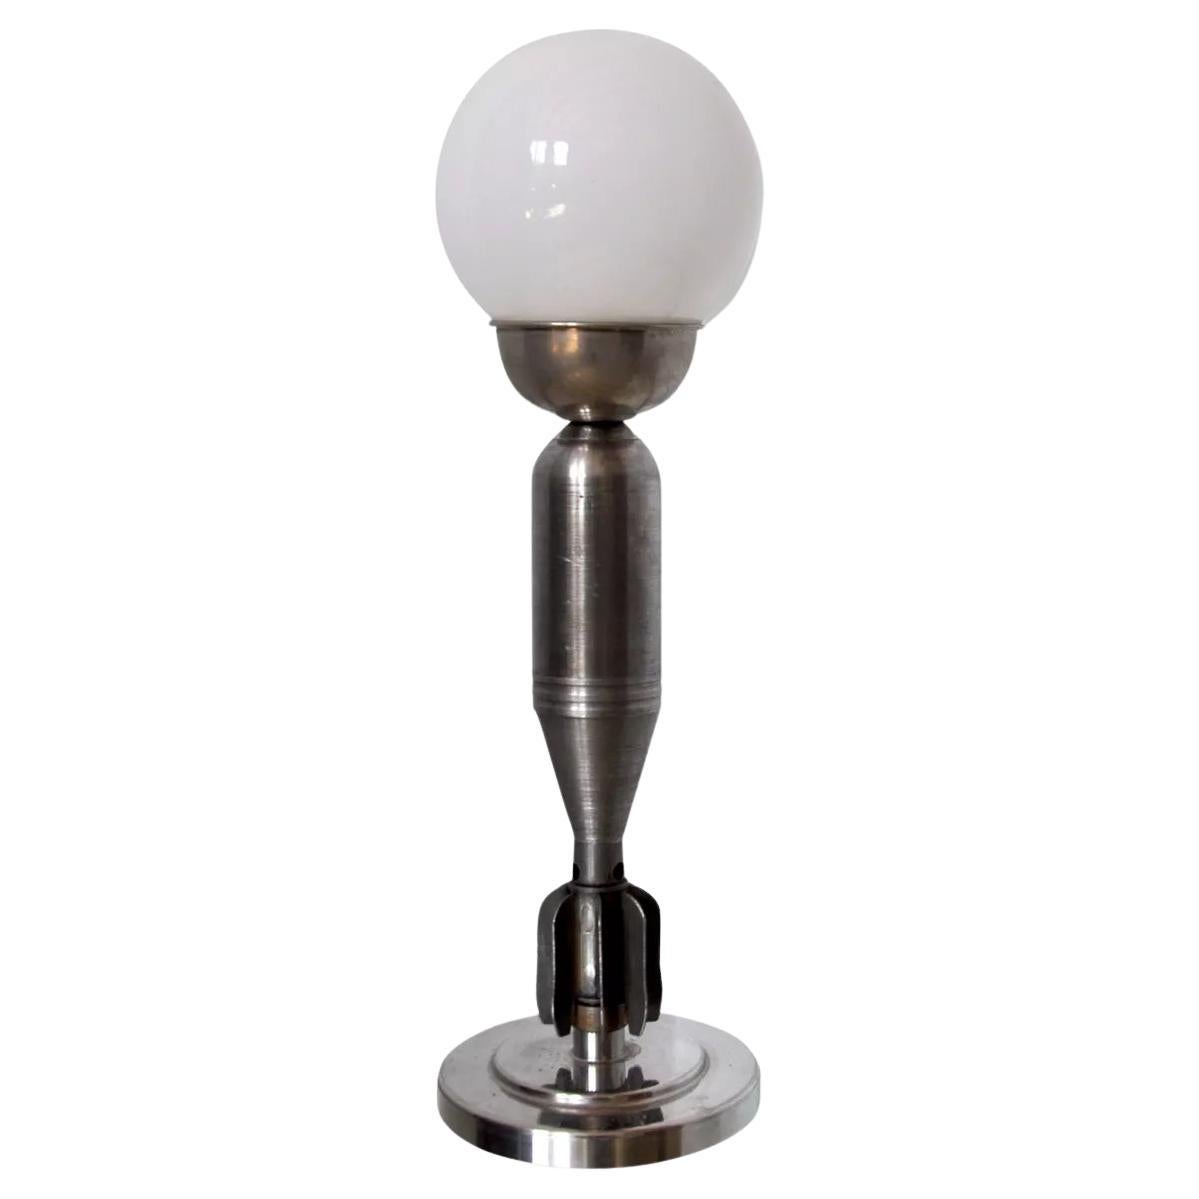 "Rocket" Midcentury Desk Lamp